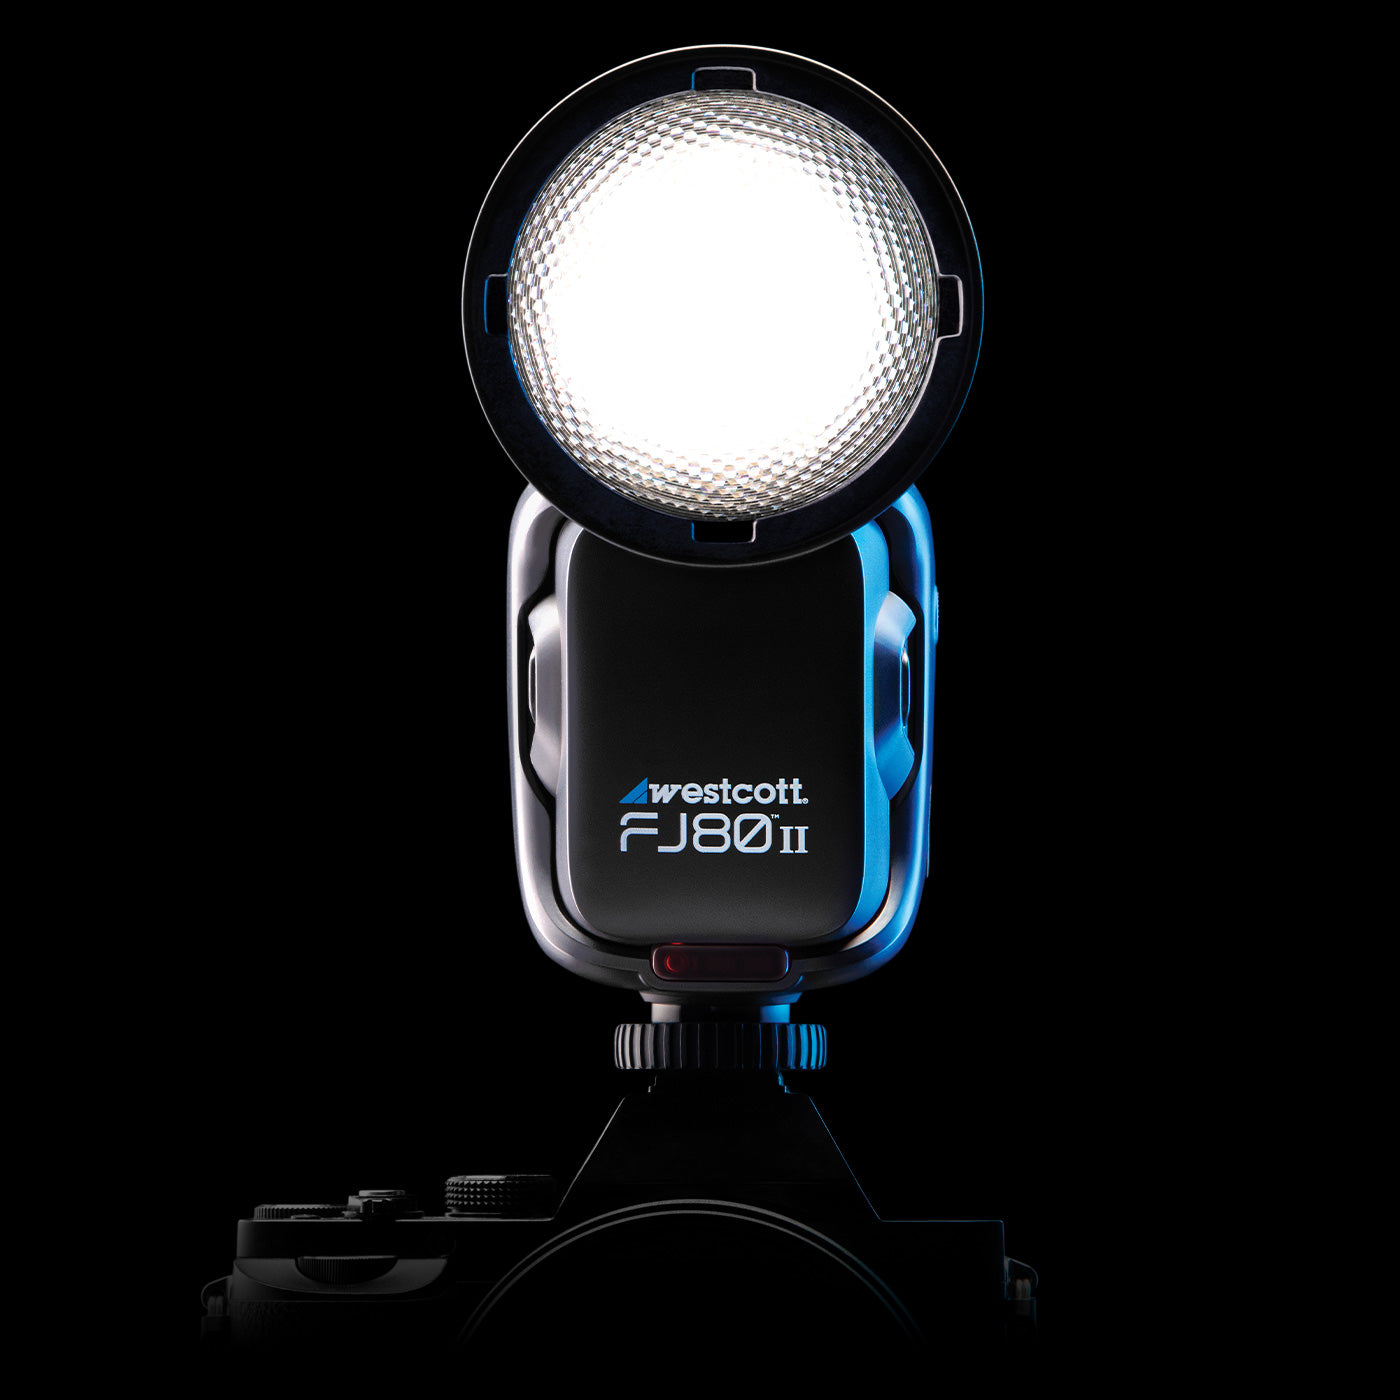 fj80 speedlight on sony camera